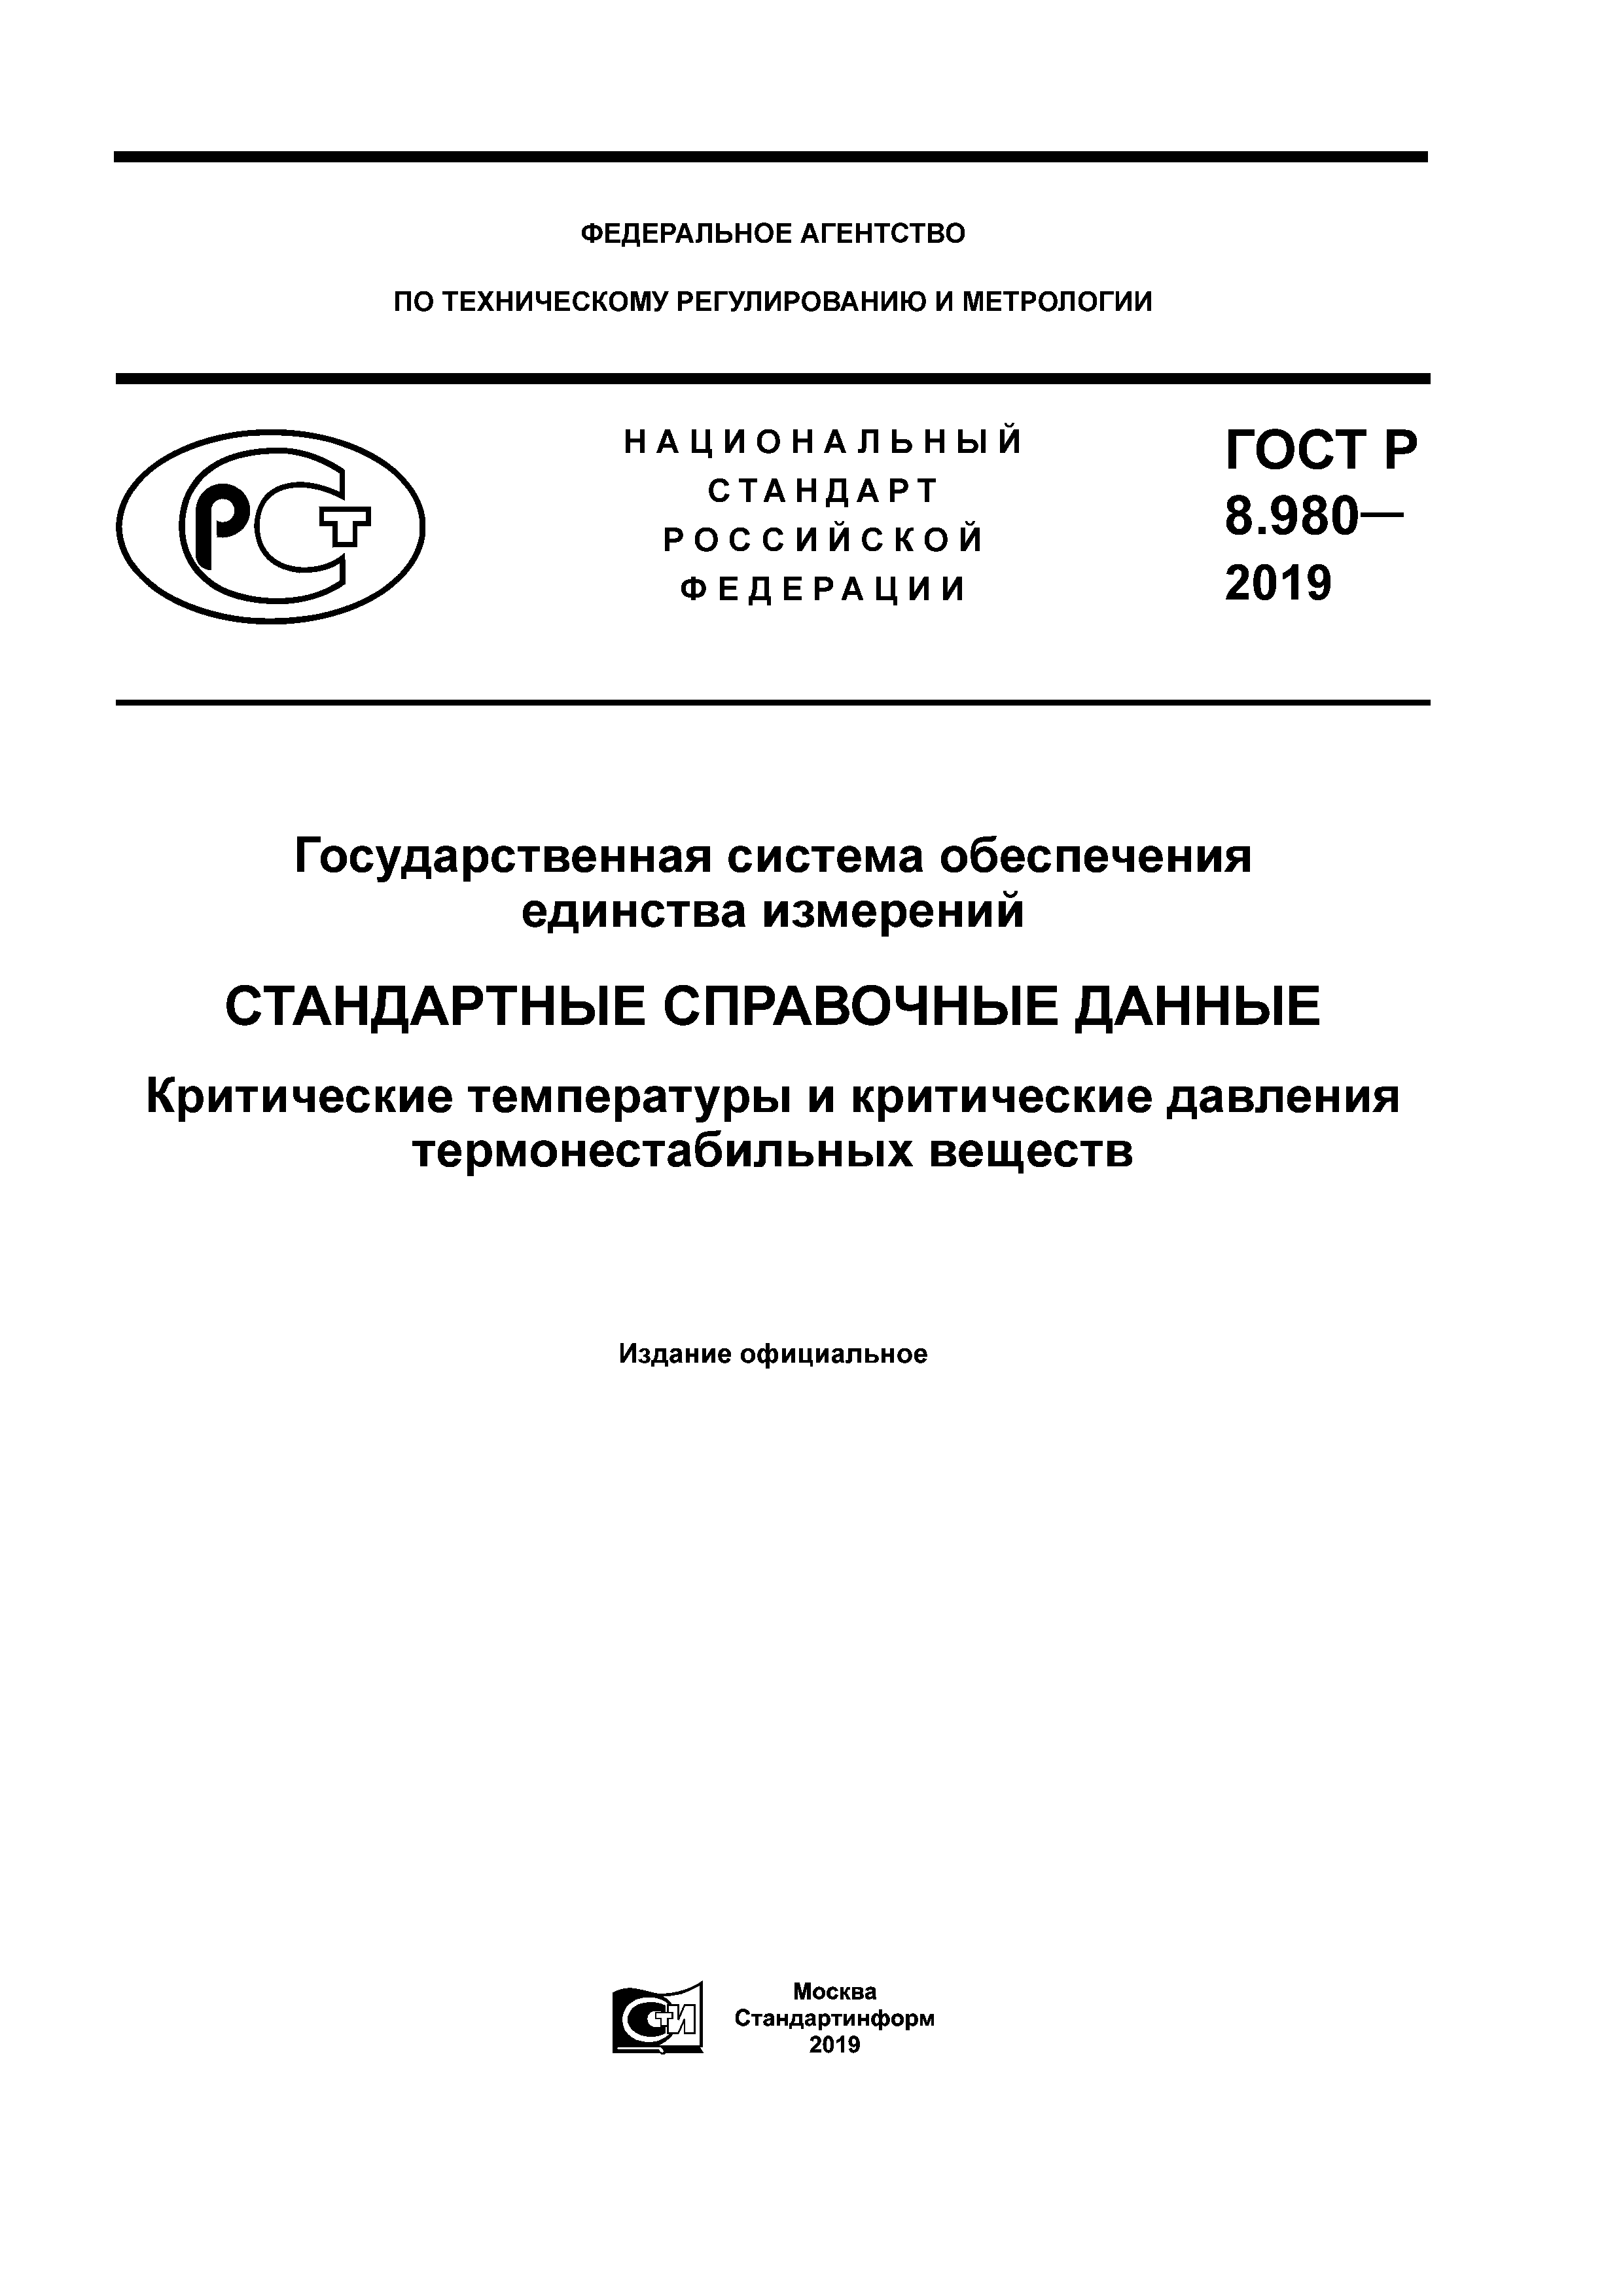 ГОСТ Р 8.980-2019